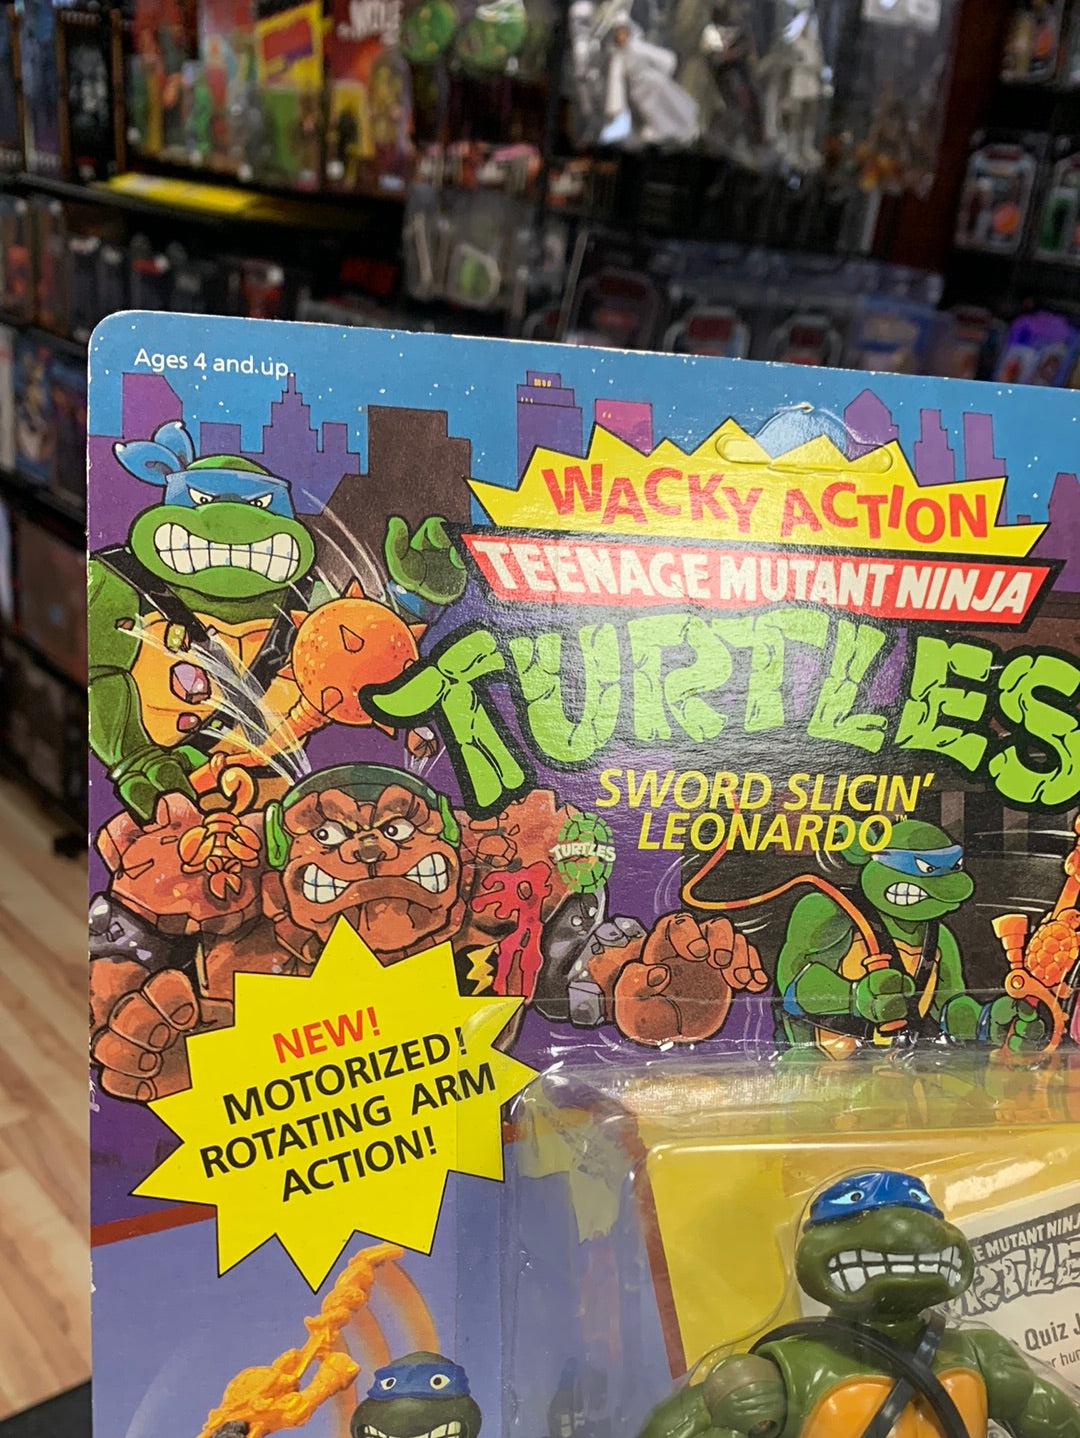 Wacky Action Sword Slicin Leonardo (Vintage TMNT Ninja Turtles